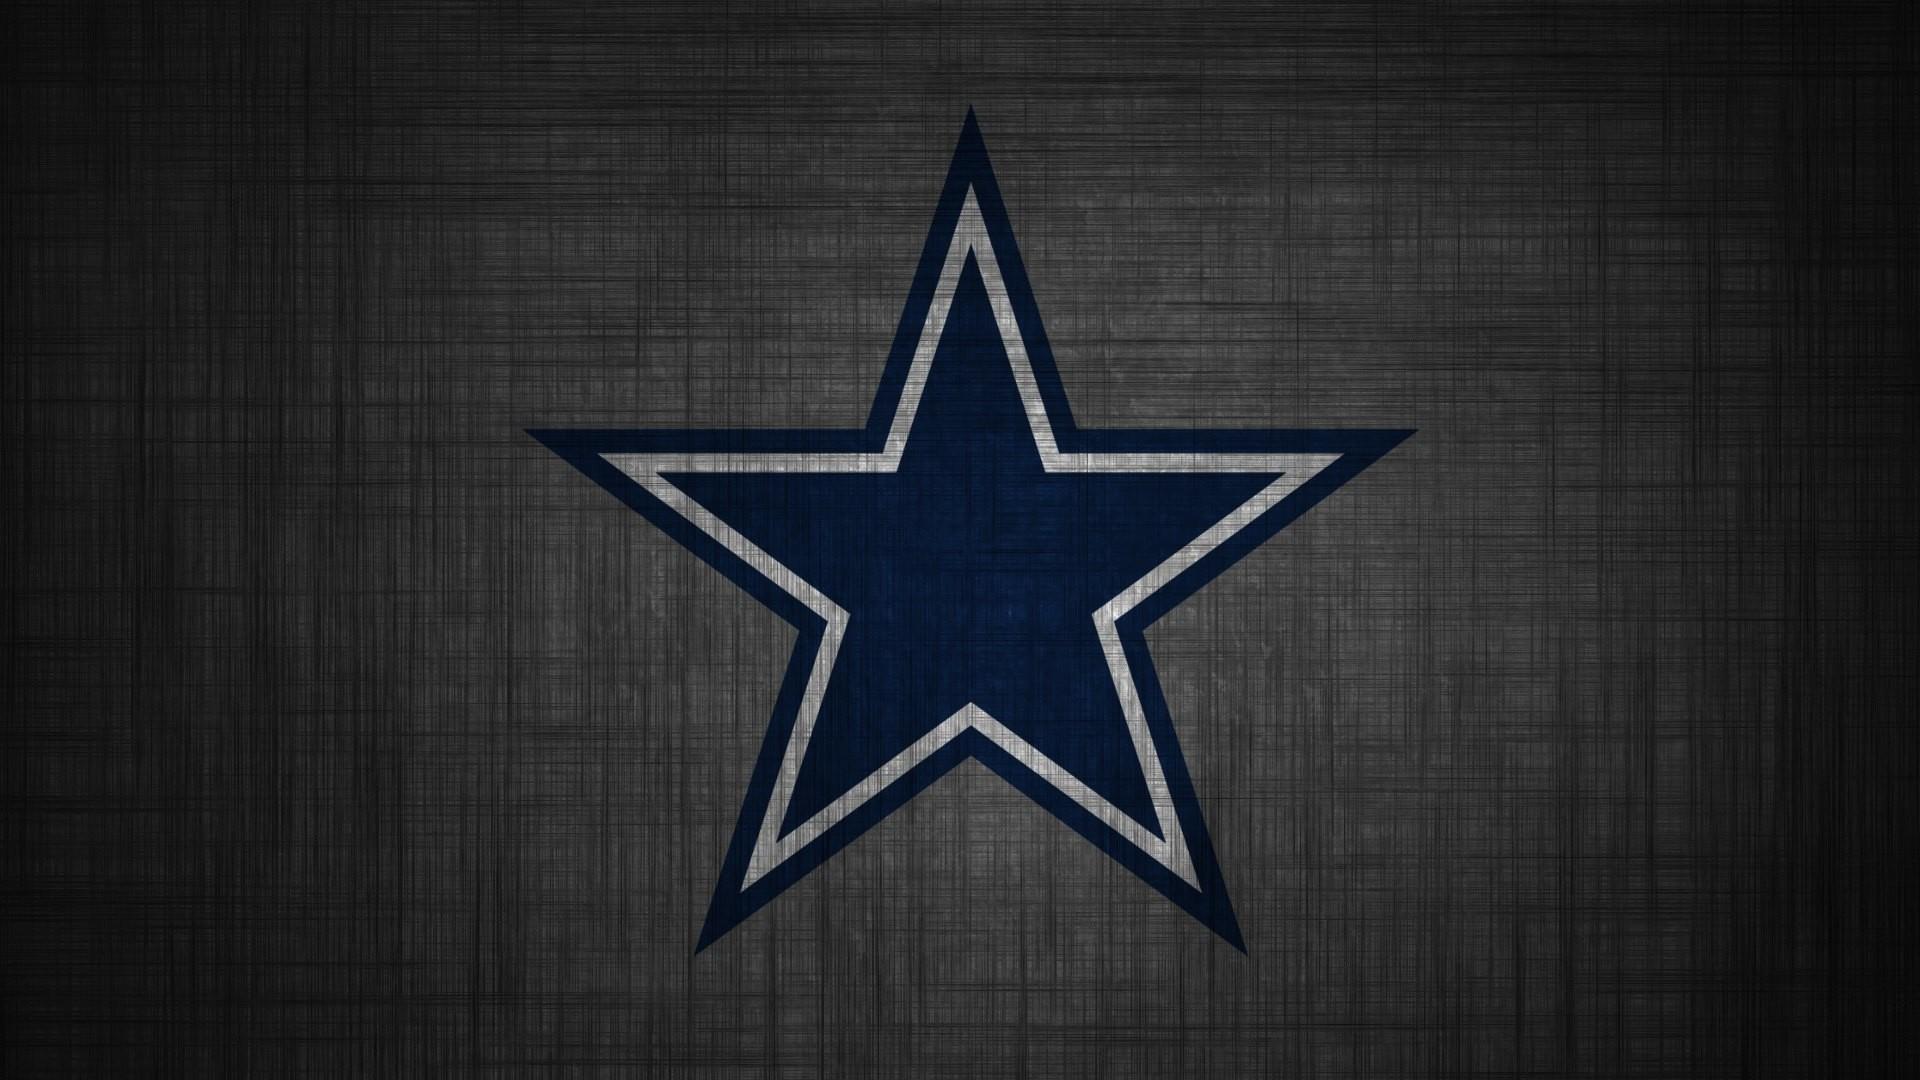 Dallas Cowboys Wallpaper HD